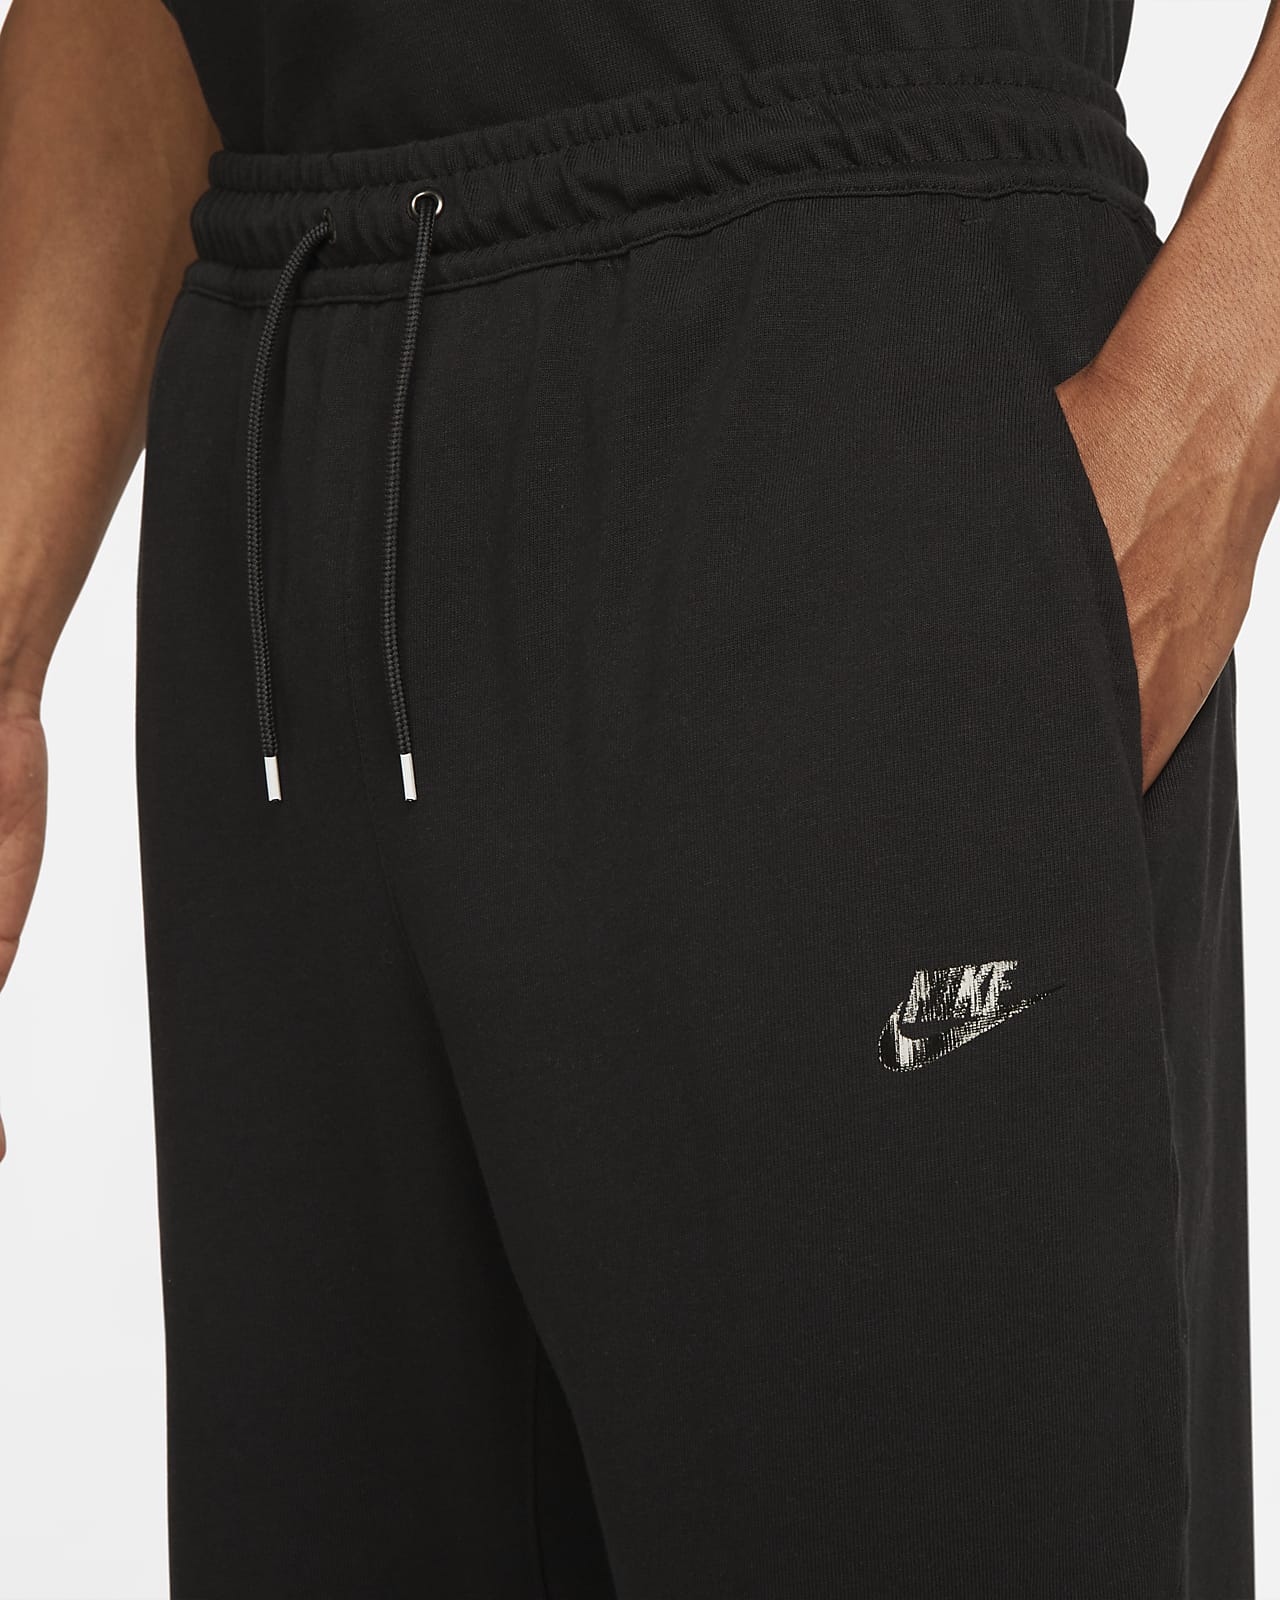 Nike Pantalón ligero con dobladillo abierto - Hombre. Nike